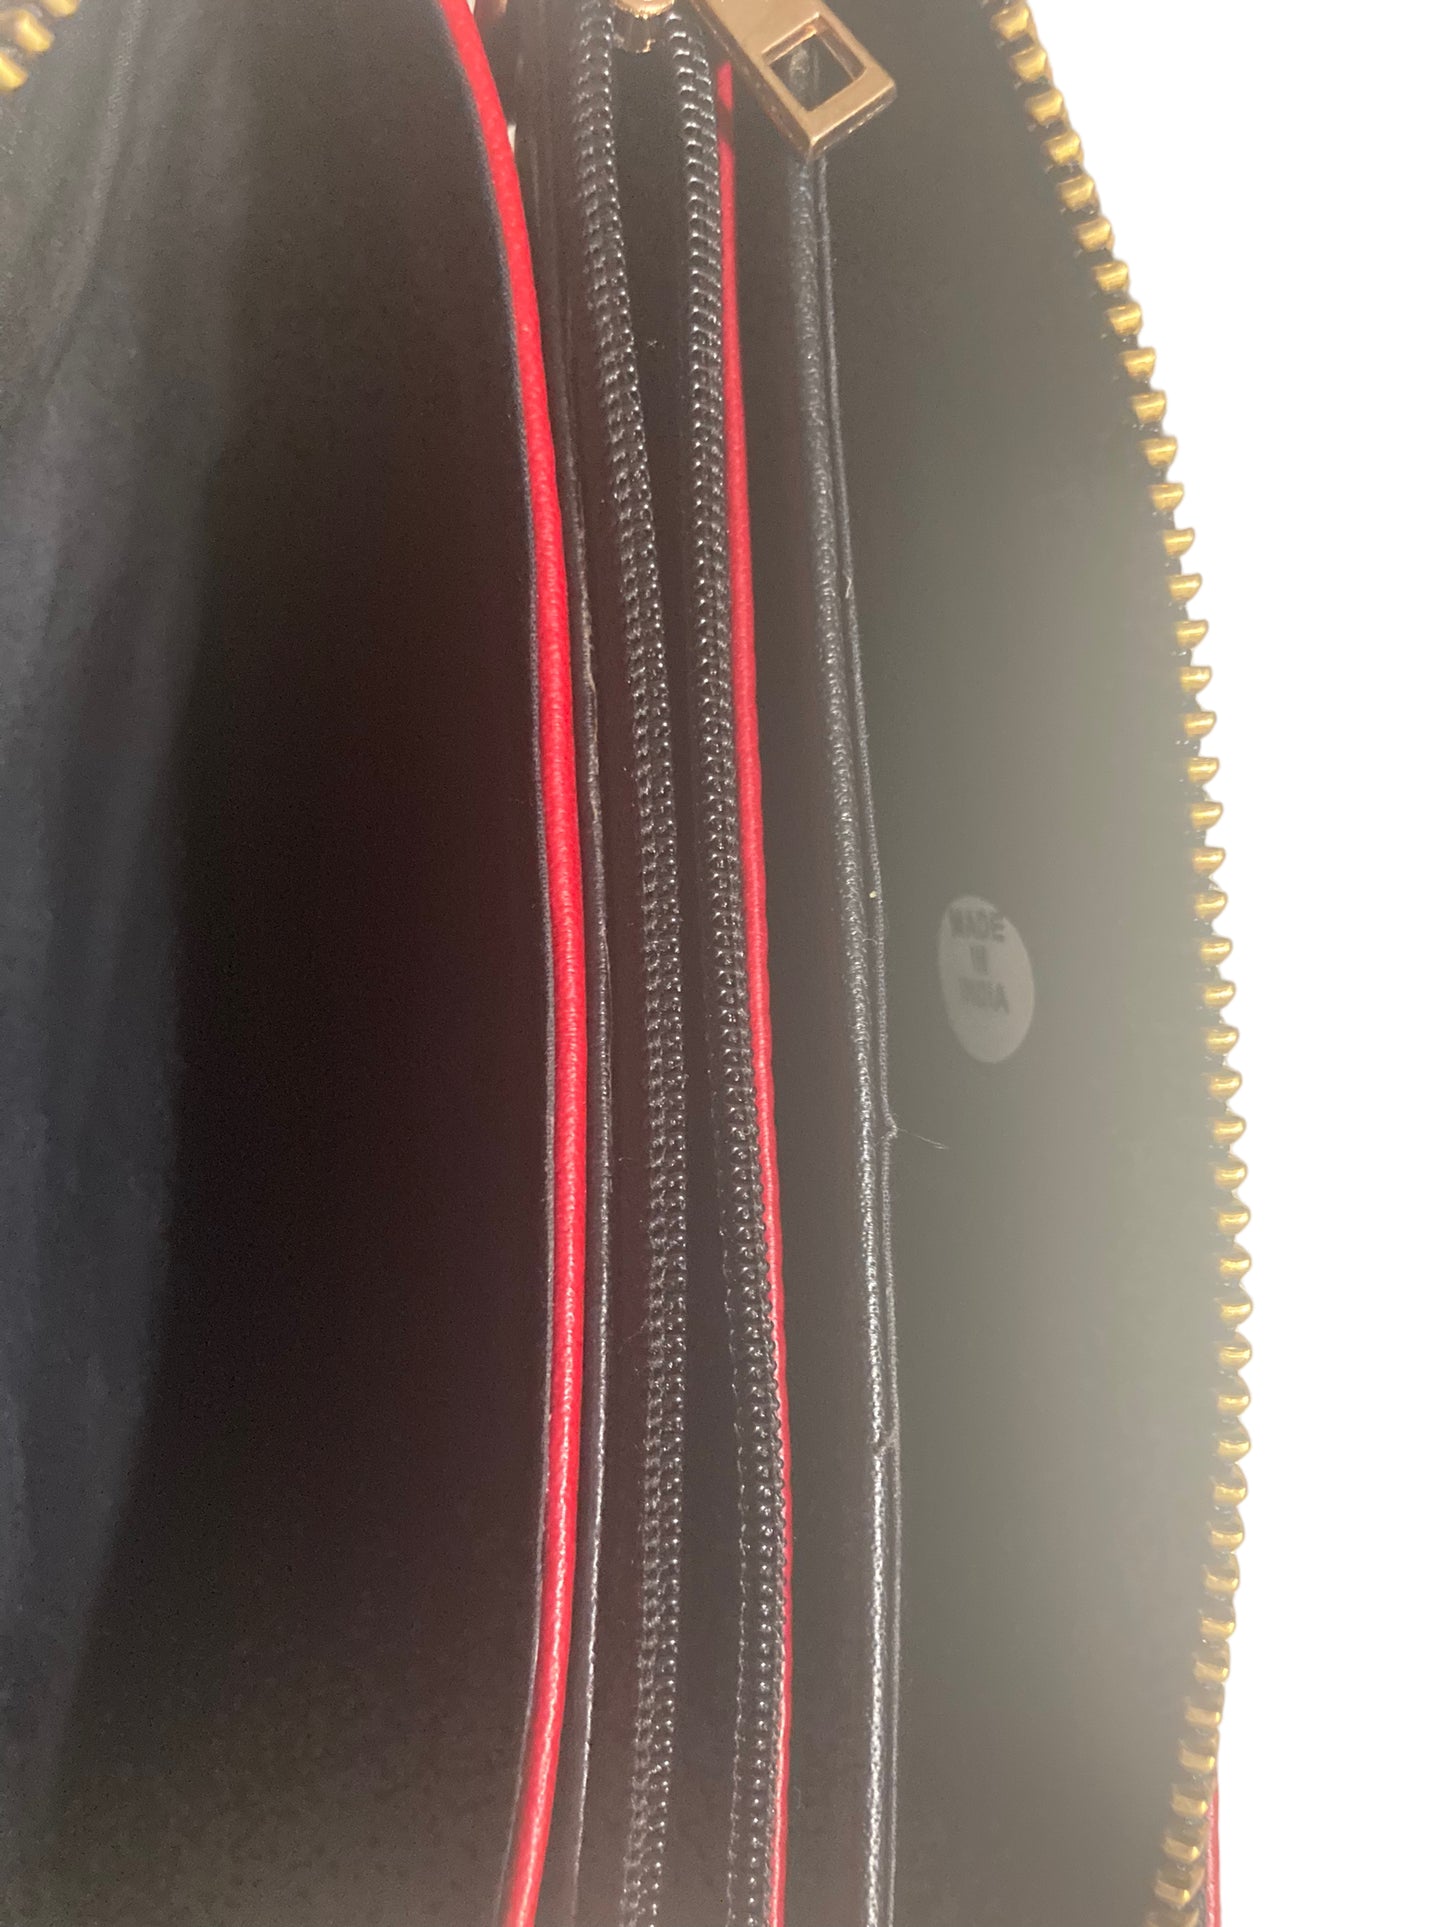 Delta Sigma Theta Clutch Crossbody Bag